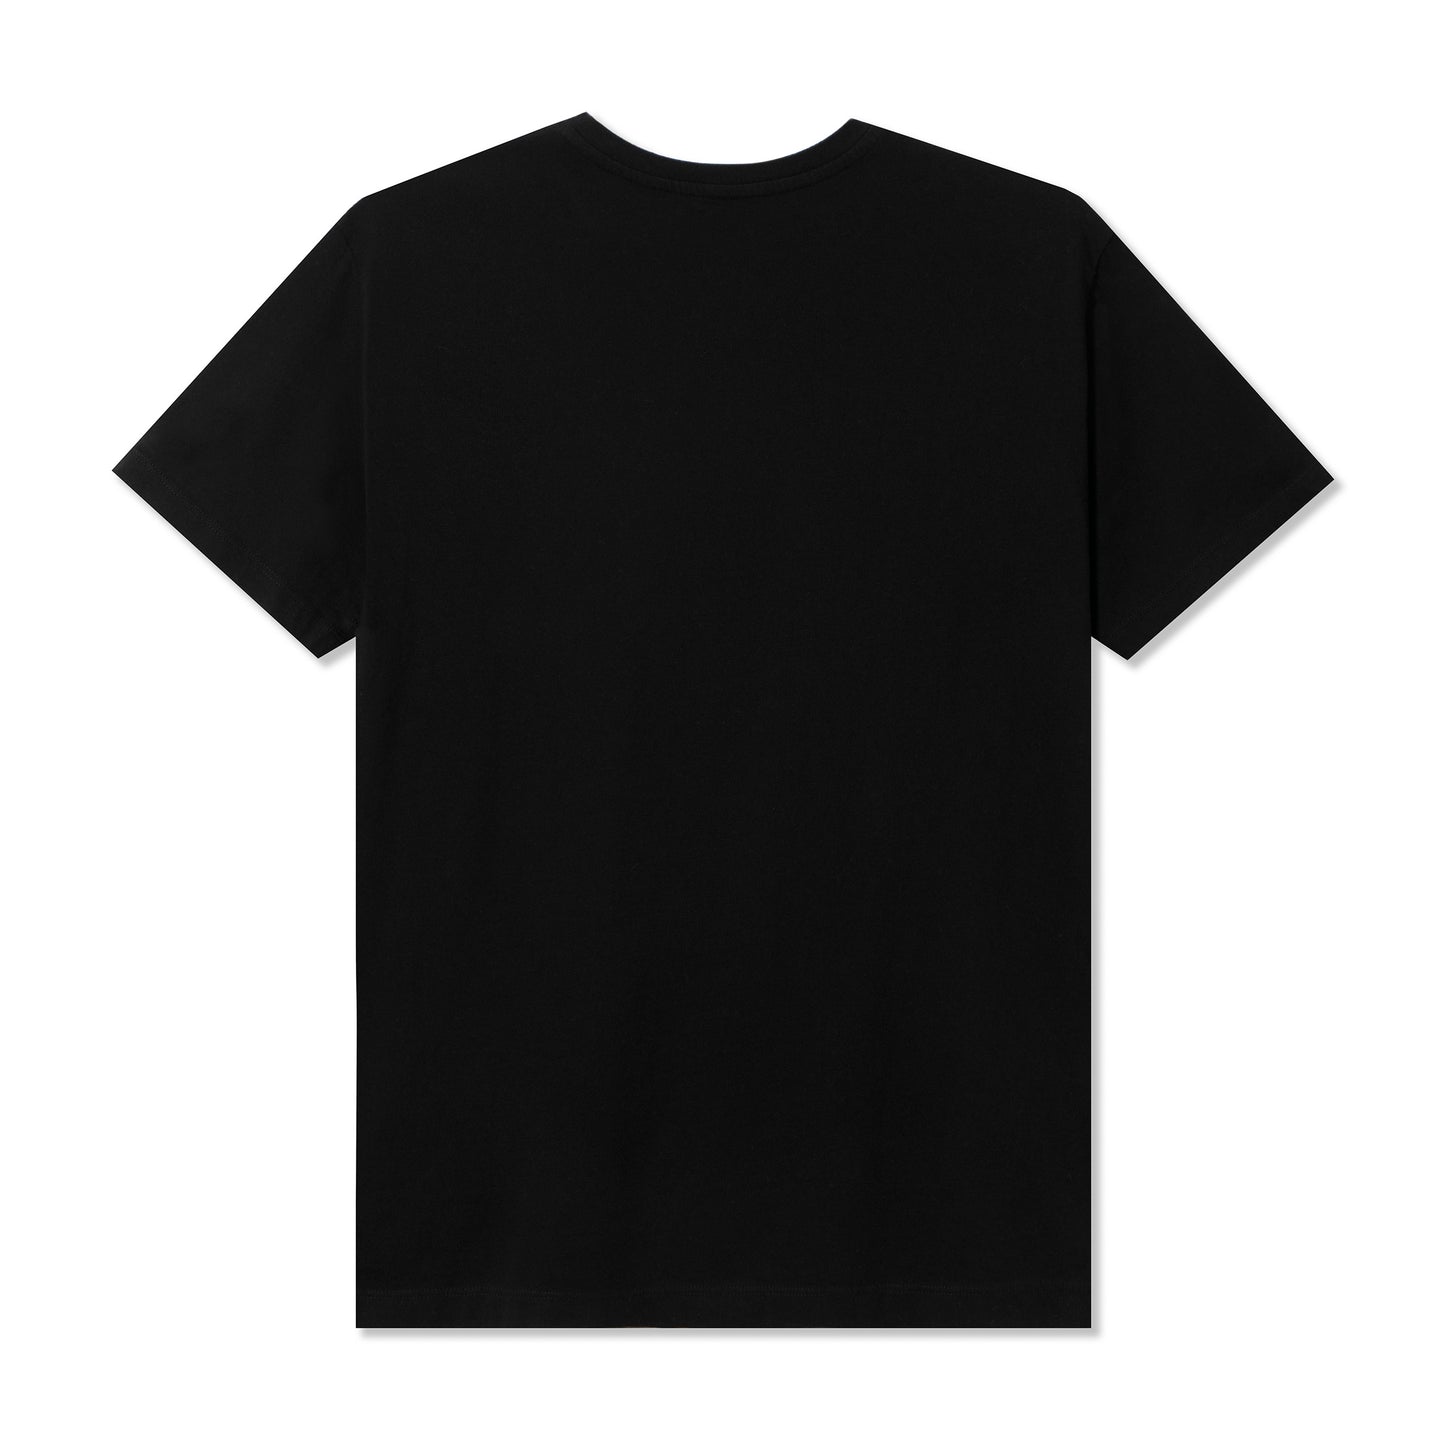 Scotty T-Shirt (Unisex)